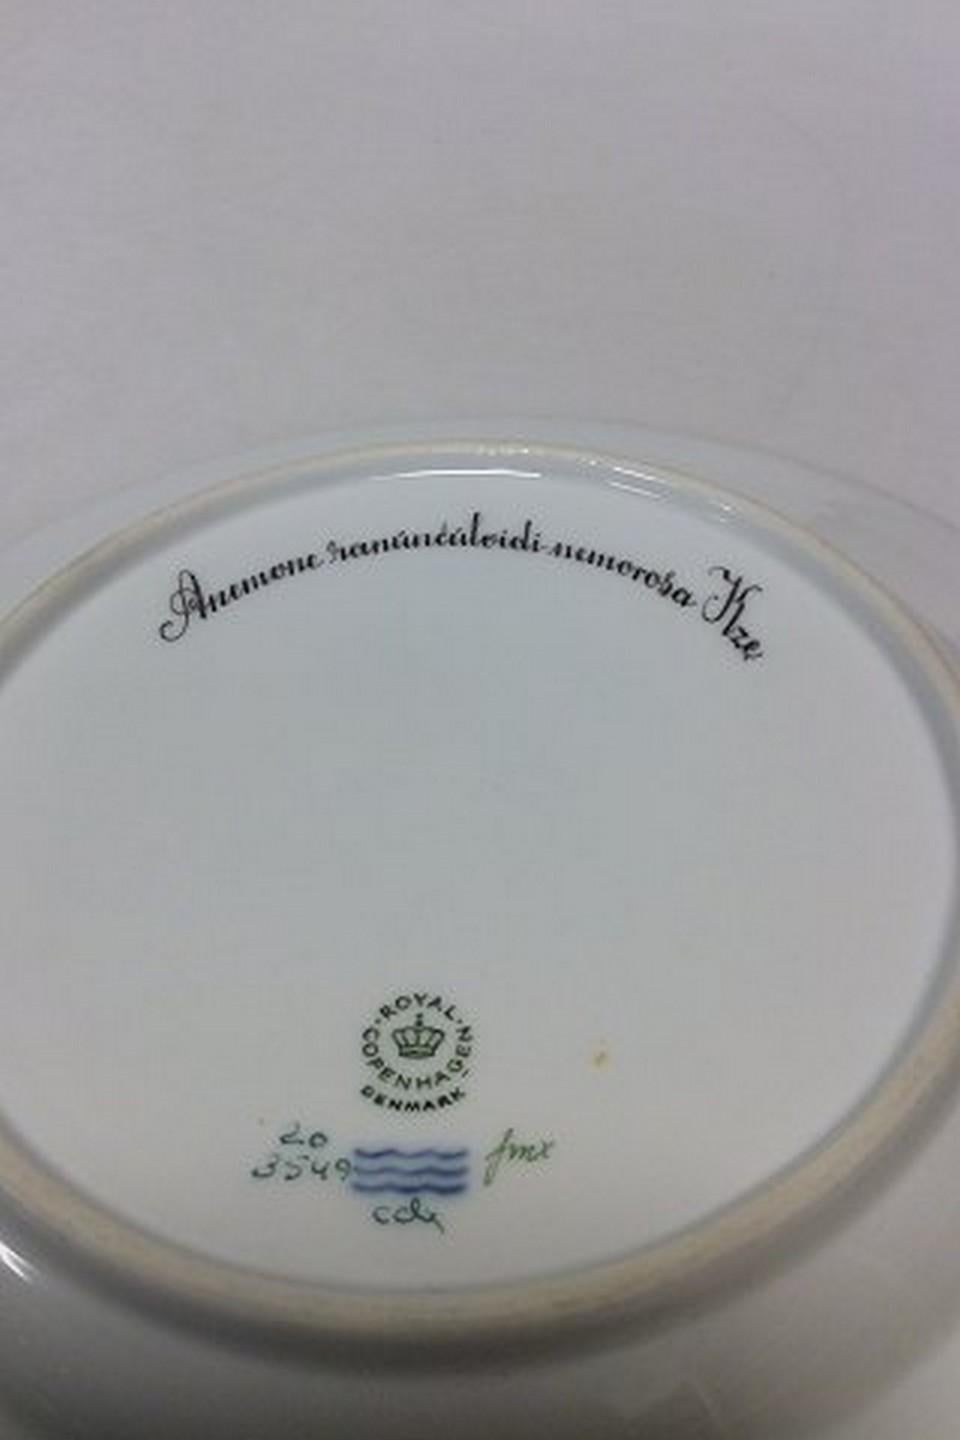 Royal Copenhagen Flora Danica dinner plate No 624(3549). Measures 26 cm diameter (10 15/64